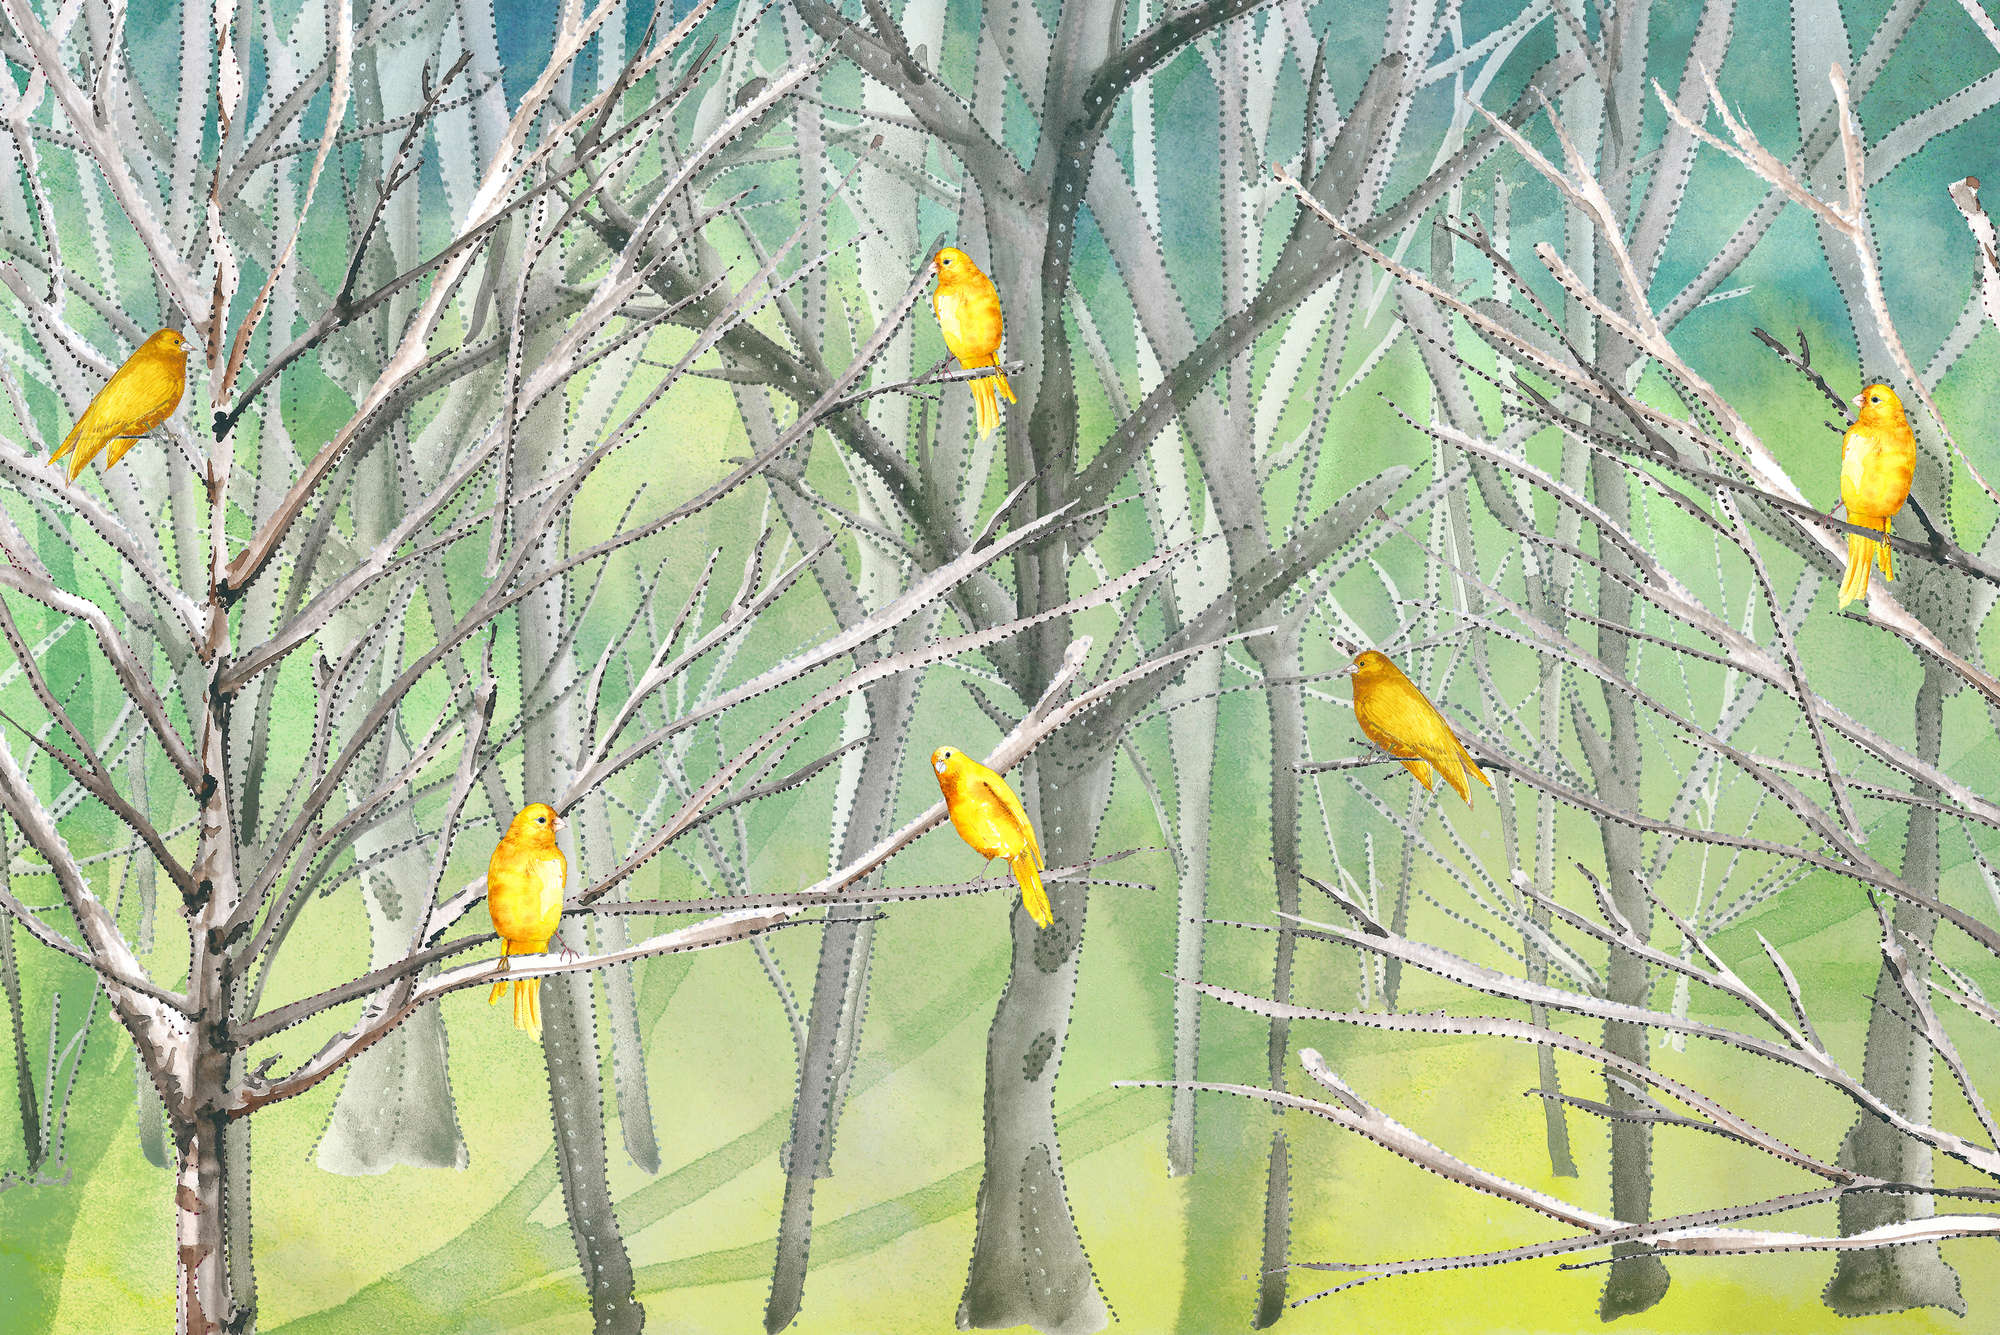             Papel pintado de bosque con pájaros en azul y amarillo sobre vellón texturizado
        